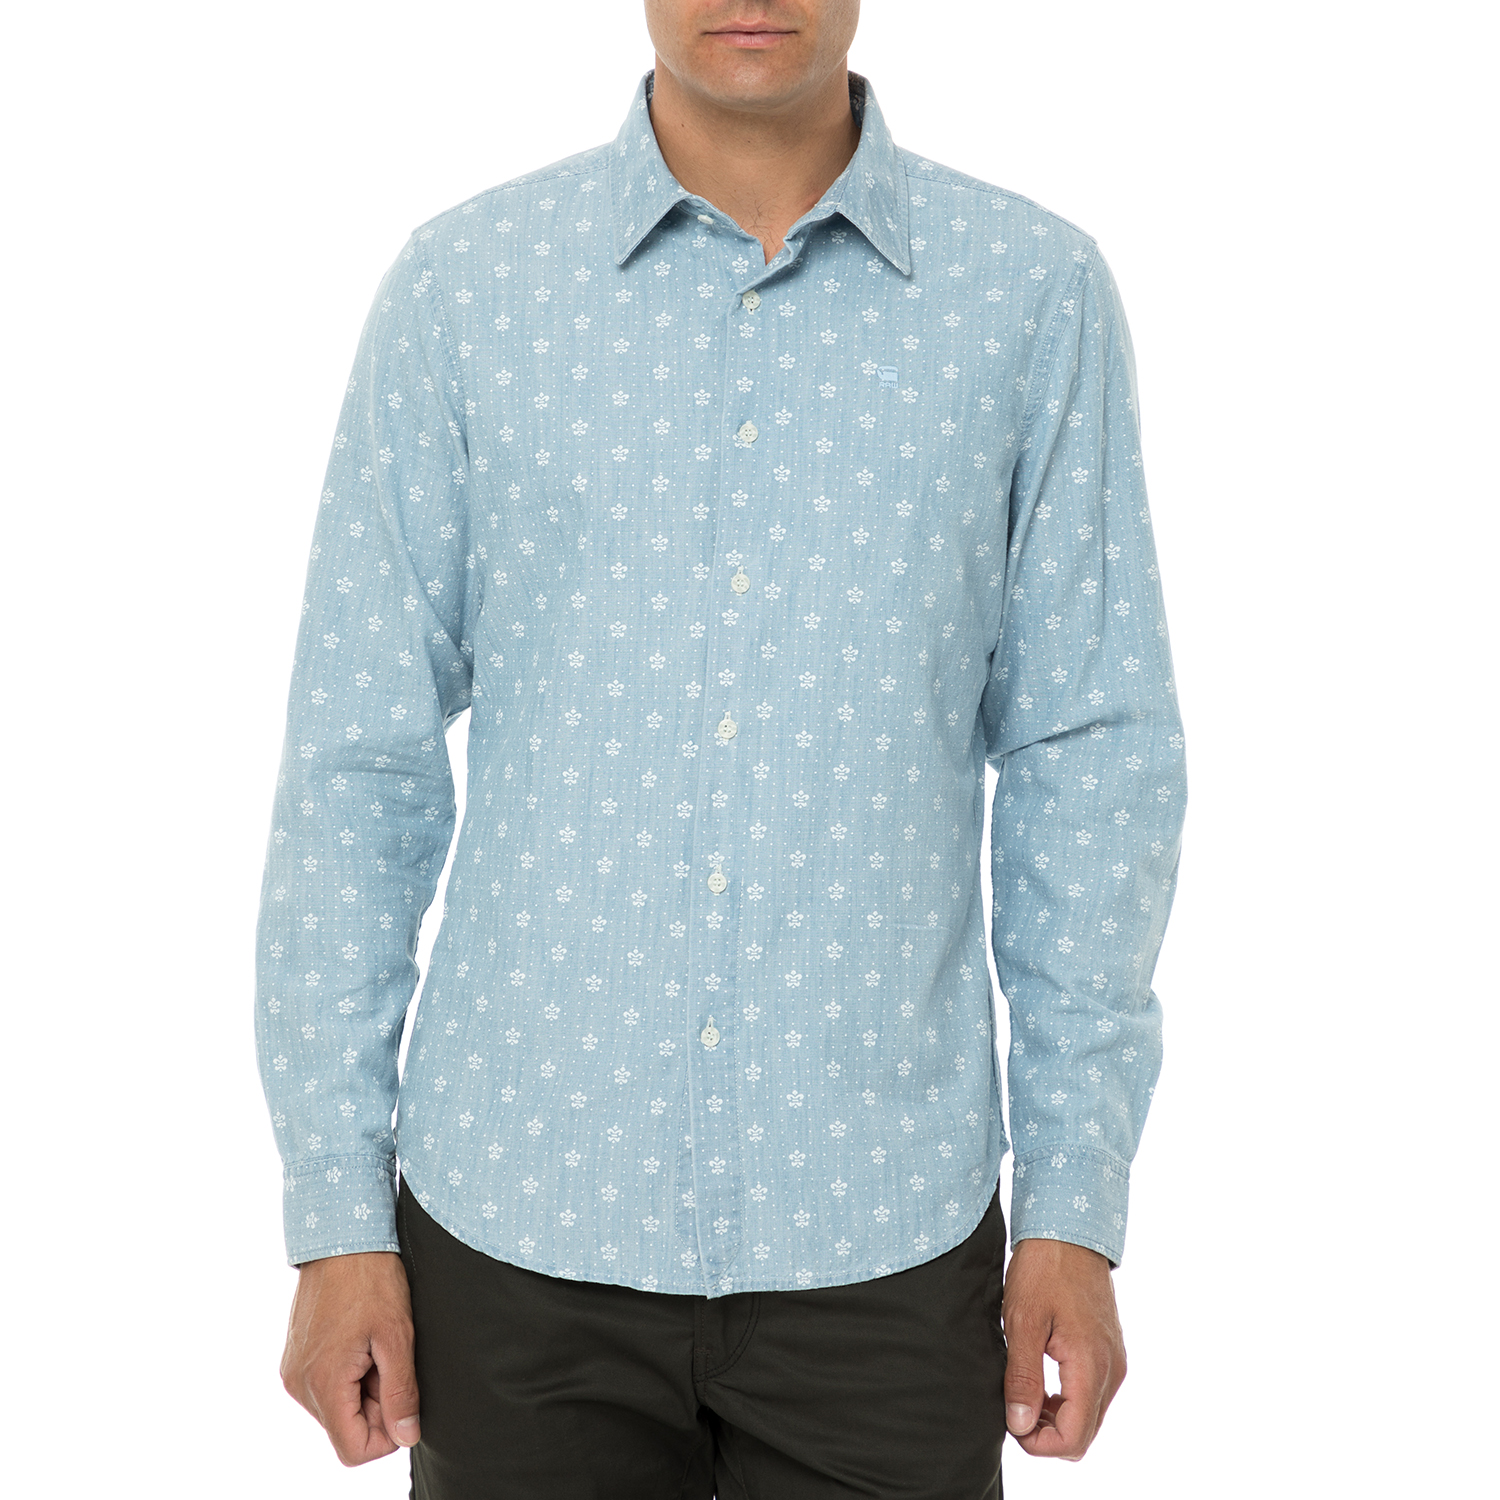 G-STAR RAW - Ανδρικό μακρυμάνικο πουκάμισο G-STAR RAW Core γαλάζιο με μοτίβο Ανδρικά/Ρούχα/Πουκάμισα/Μακρυμάνικα